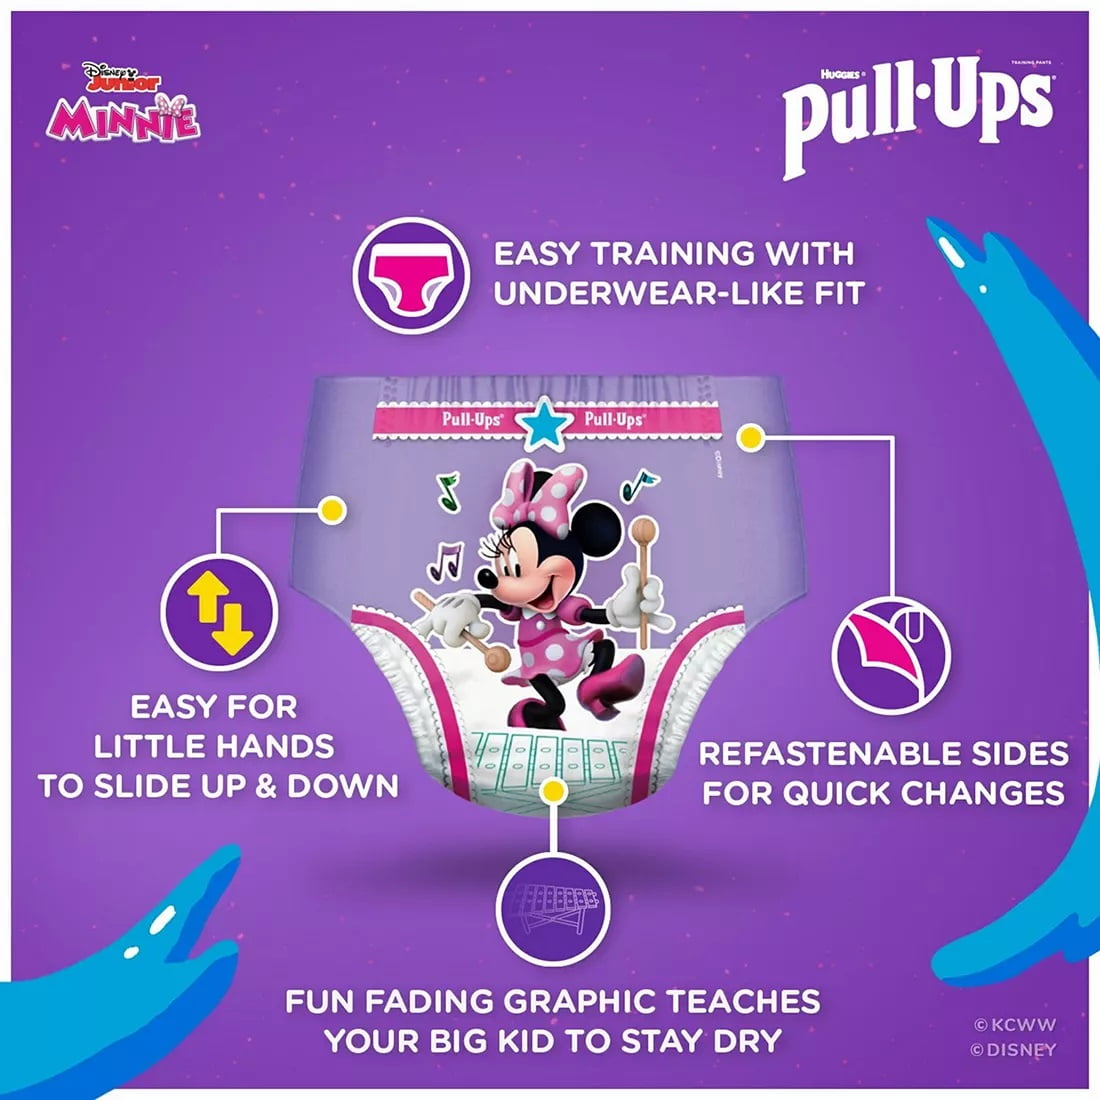 Huggies Pull Ups Training Pants for girls 14pc (Large) (16-23 kg) - XL -  Buy 1 Huggies Pant Diapers